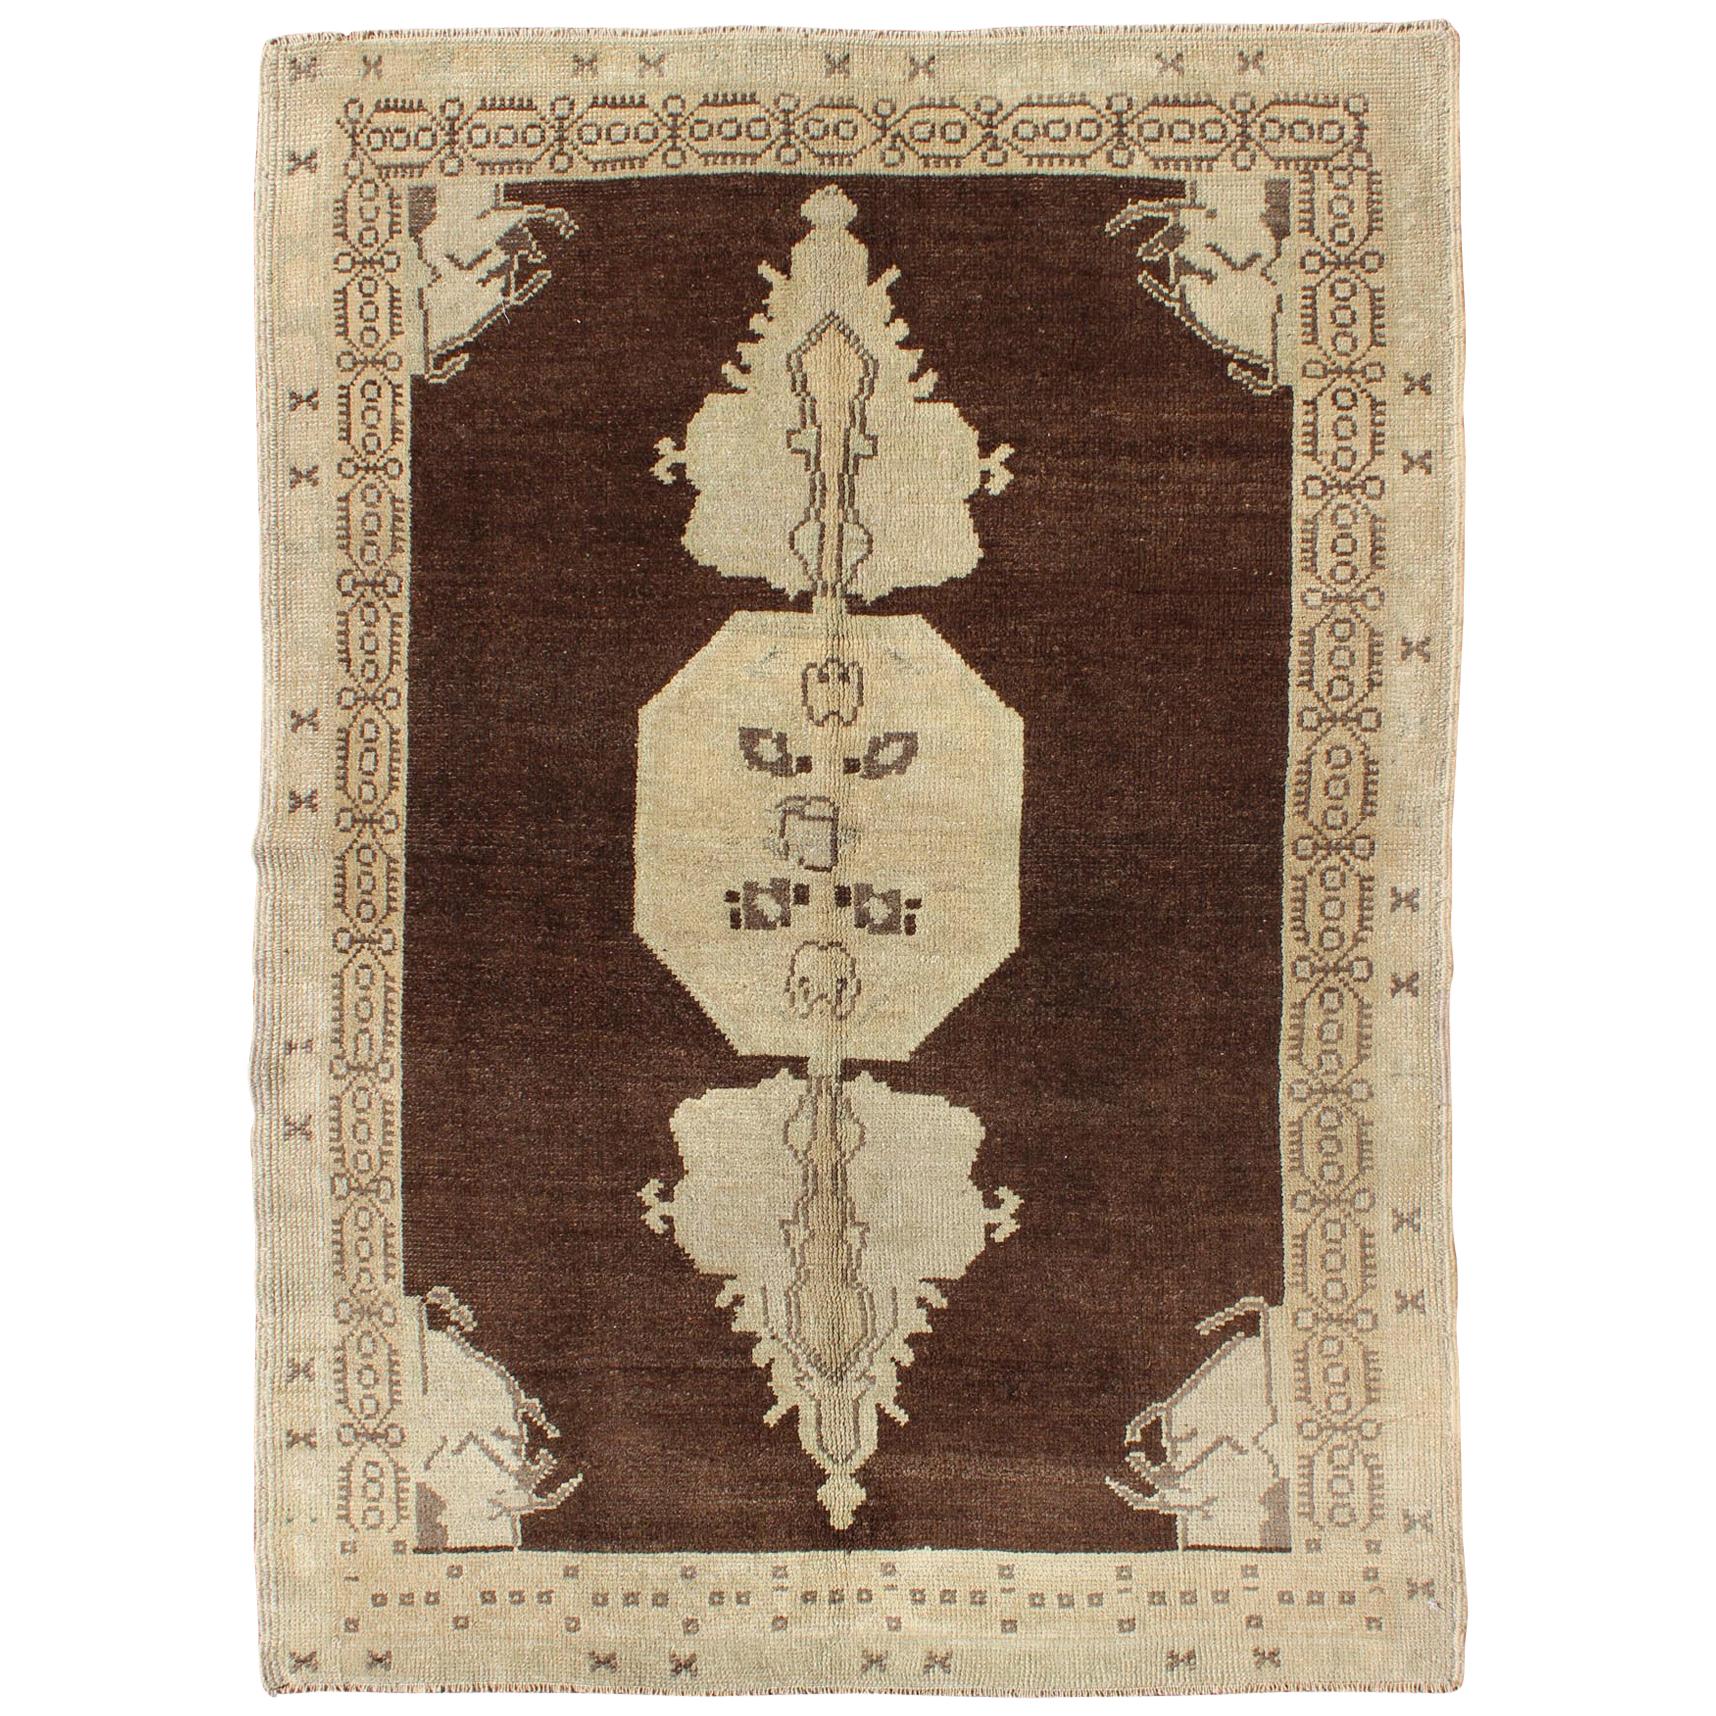  Brown and  Natural tone medallion design Oushak vintage rug from Turkey